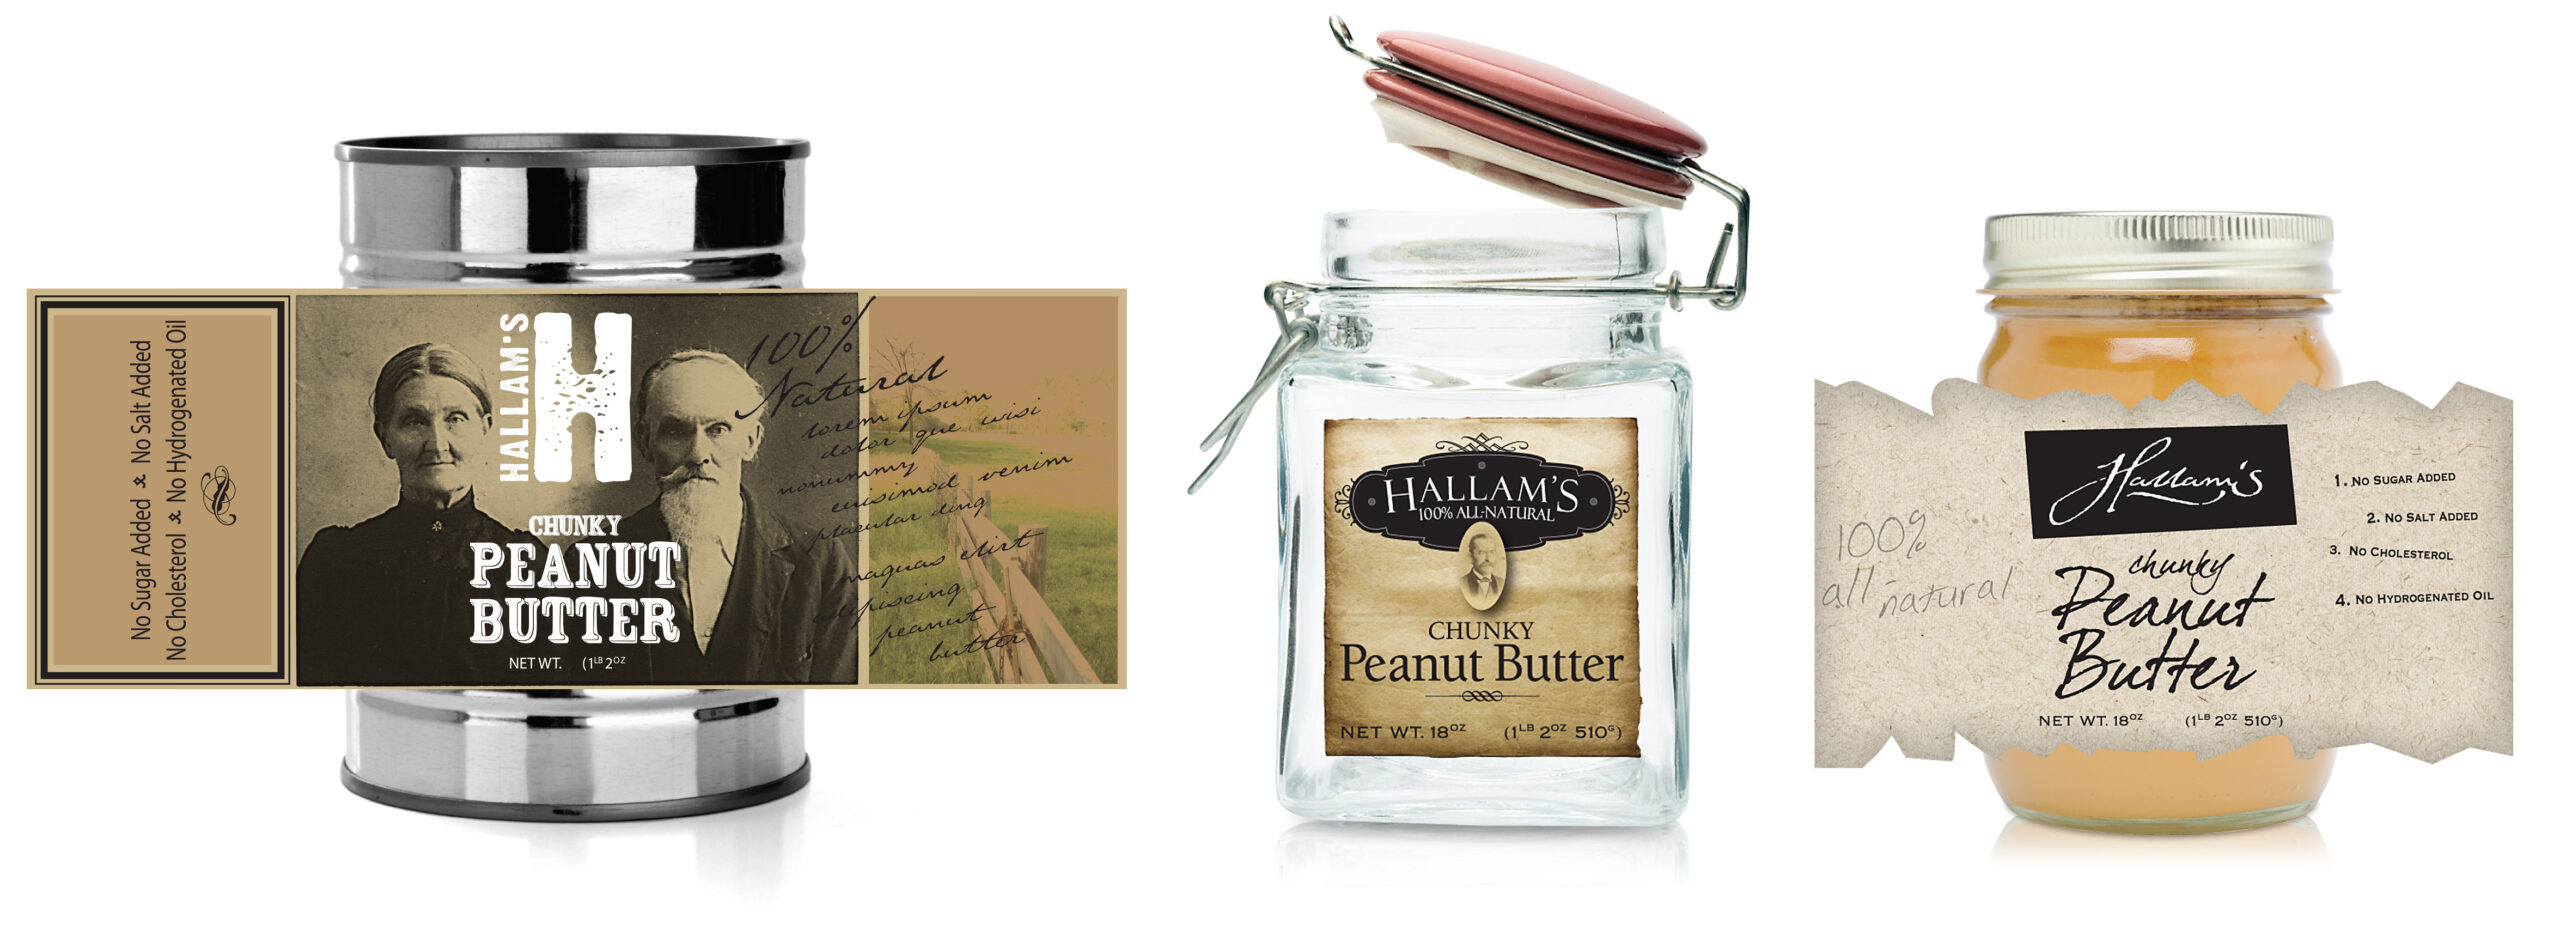 Hallam's peanut butter packaging